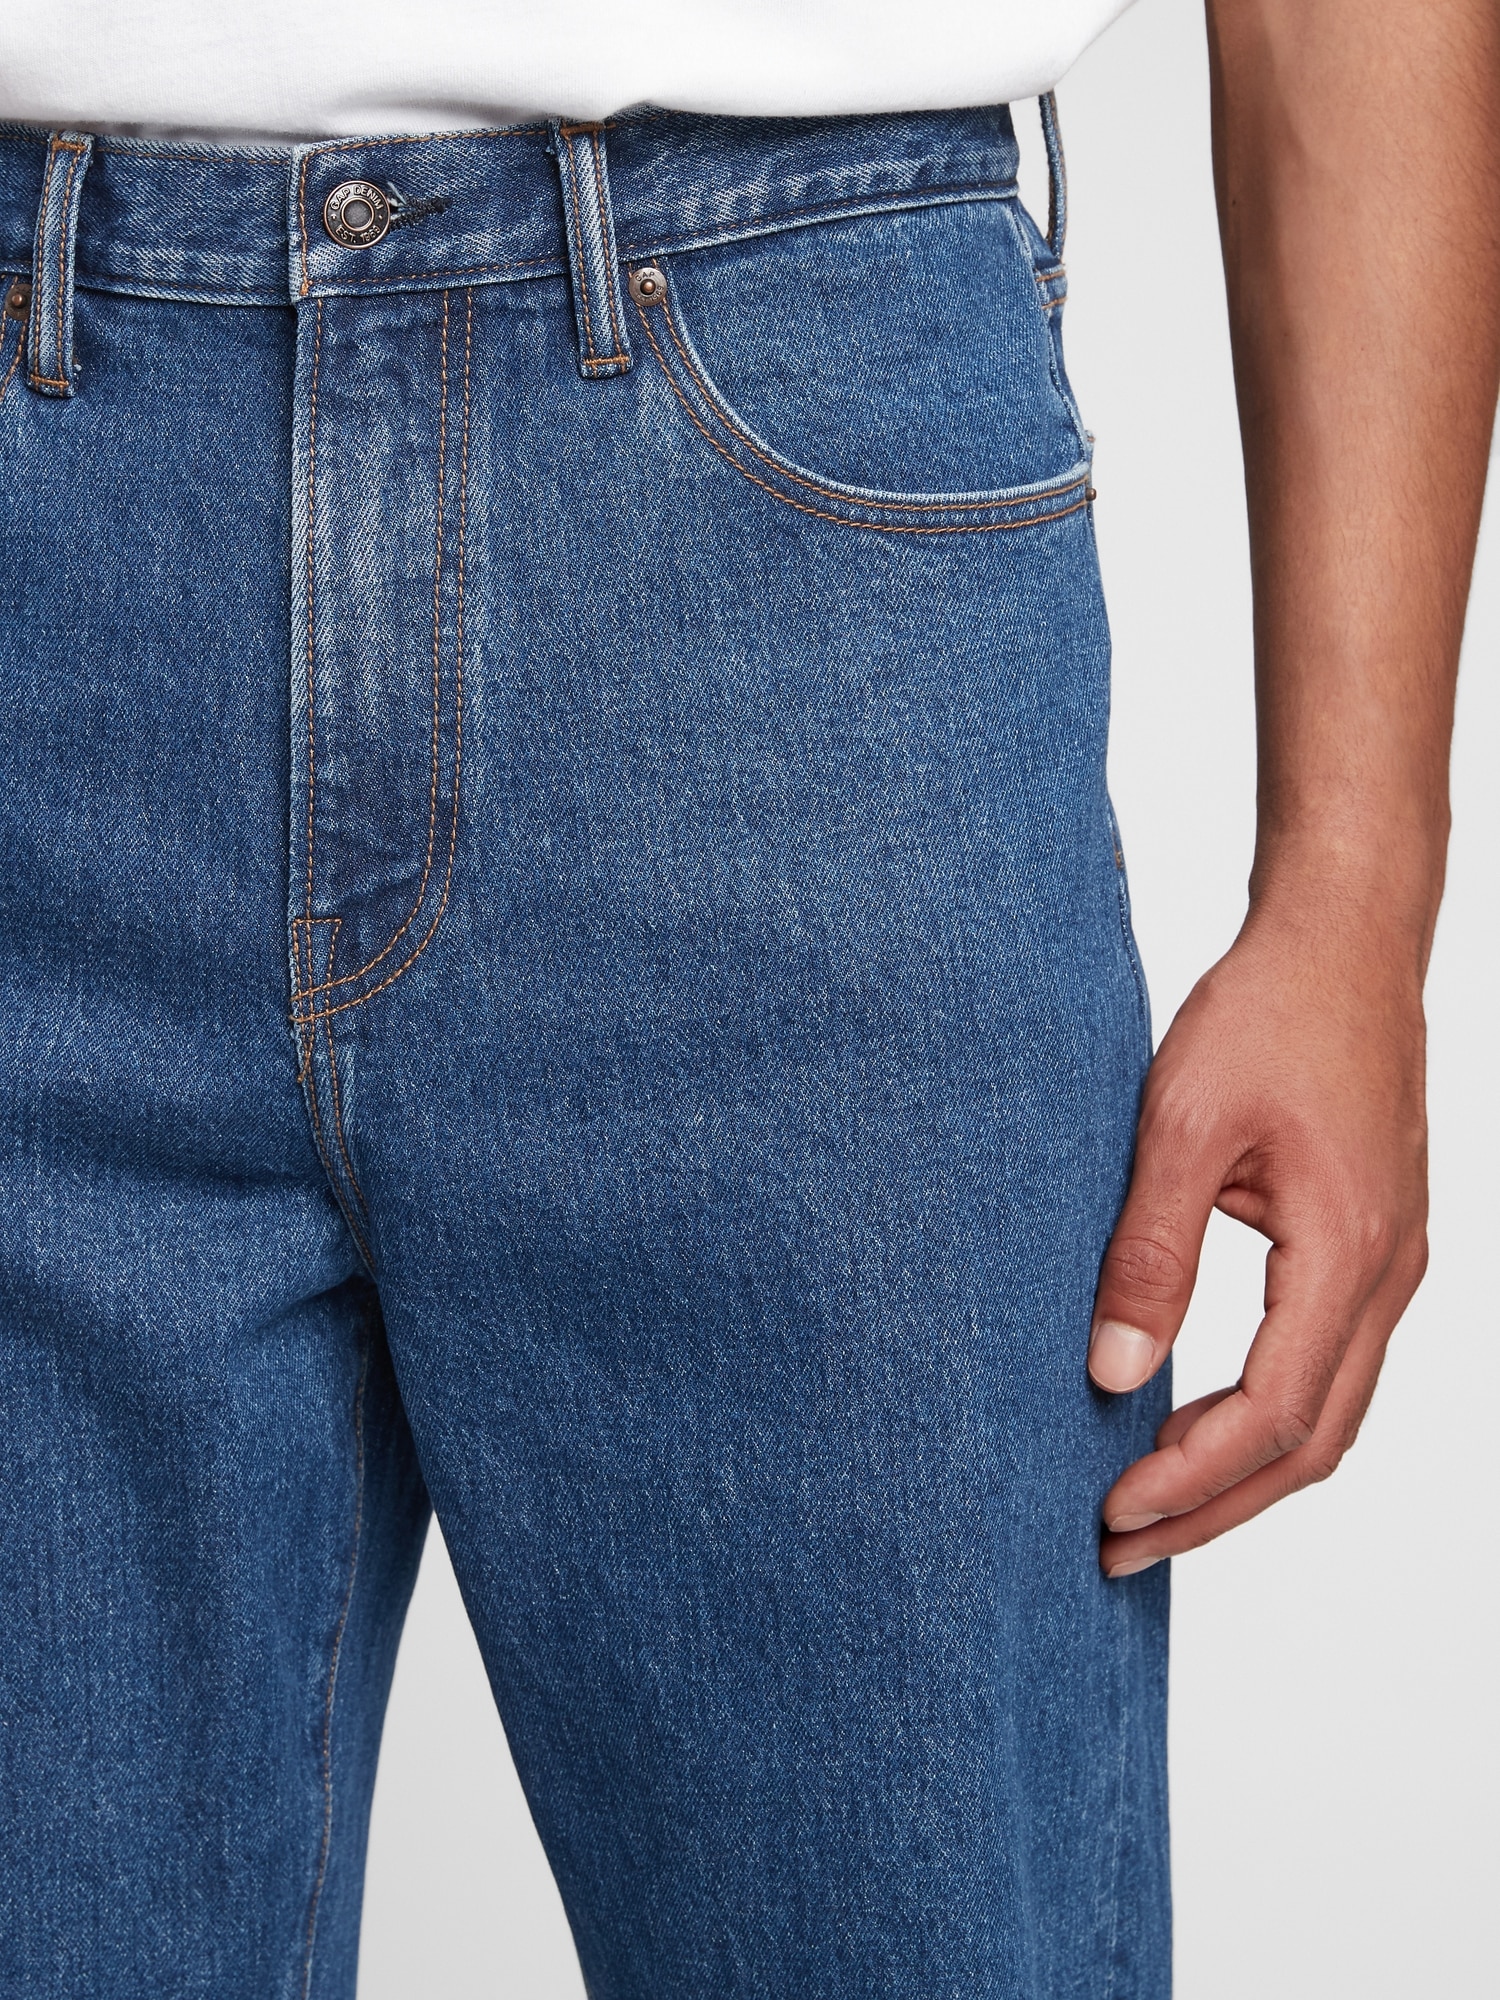 New with Tags* Gap Soft Wear Slim Taper Jeans / Denim size 32 x 32